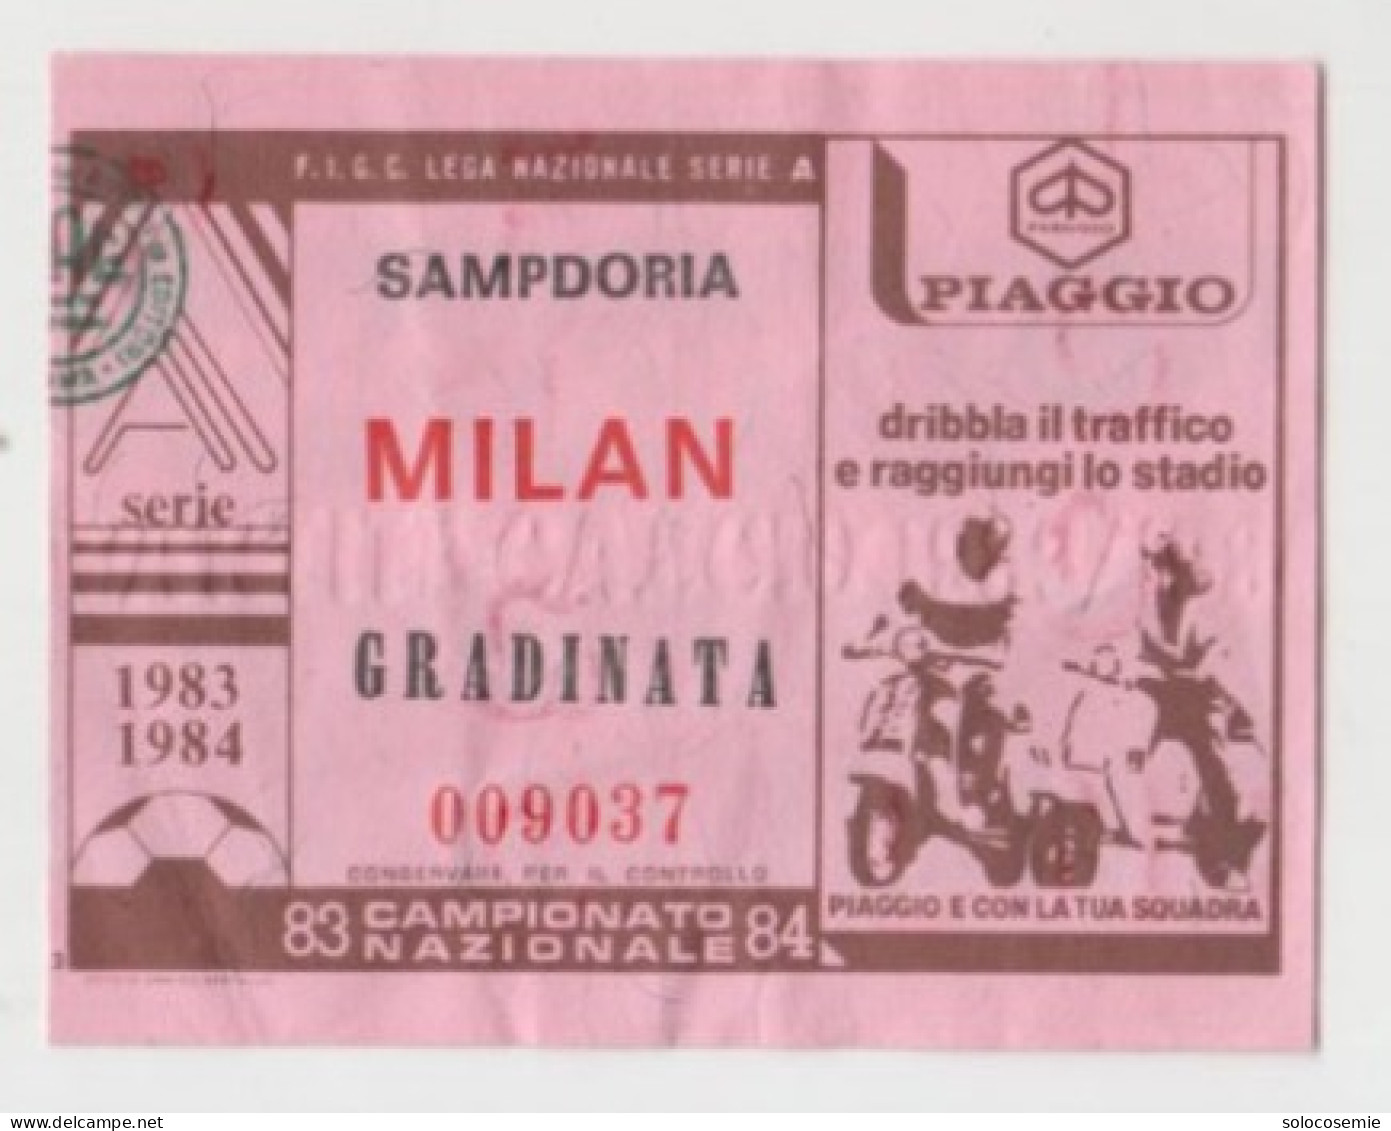 1983/84 SAMPDORIA - MILAN #  Calcio  #  Ingresso  Stadio / Ticket  - 009037  (F) - Tickets D'entrée